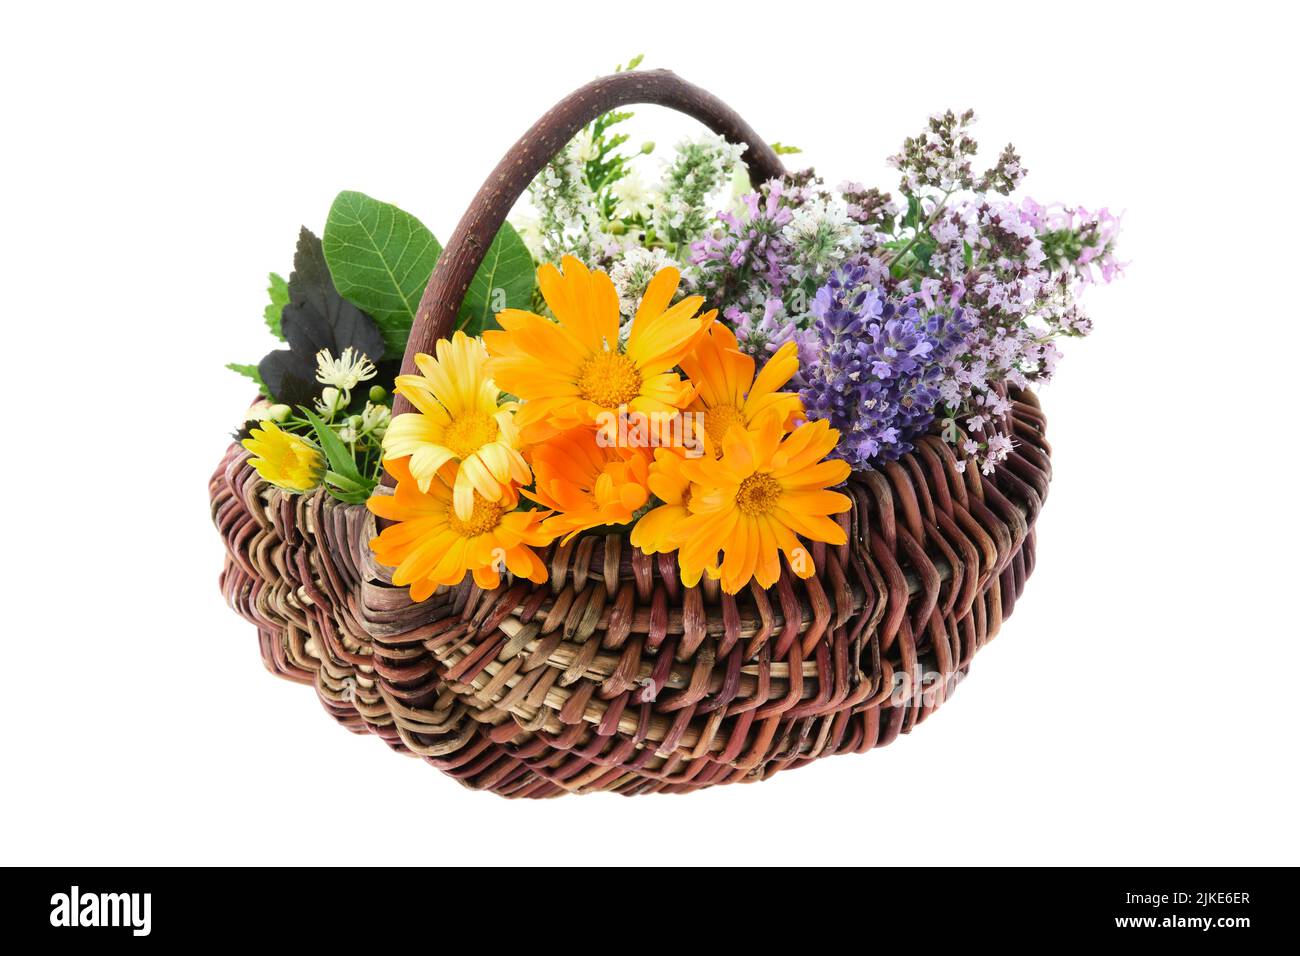 Basket full of healthy fresh medicinal herbs, isolated on white. Calendula, lavender, oregano, balm mint, melissa flowers. Alternative herbal medicine Stock Photo